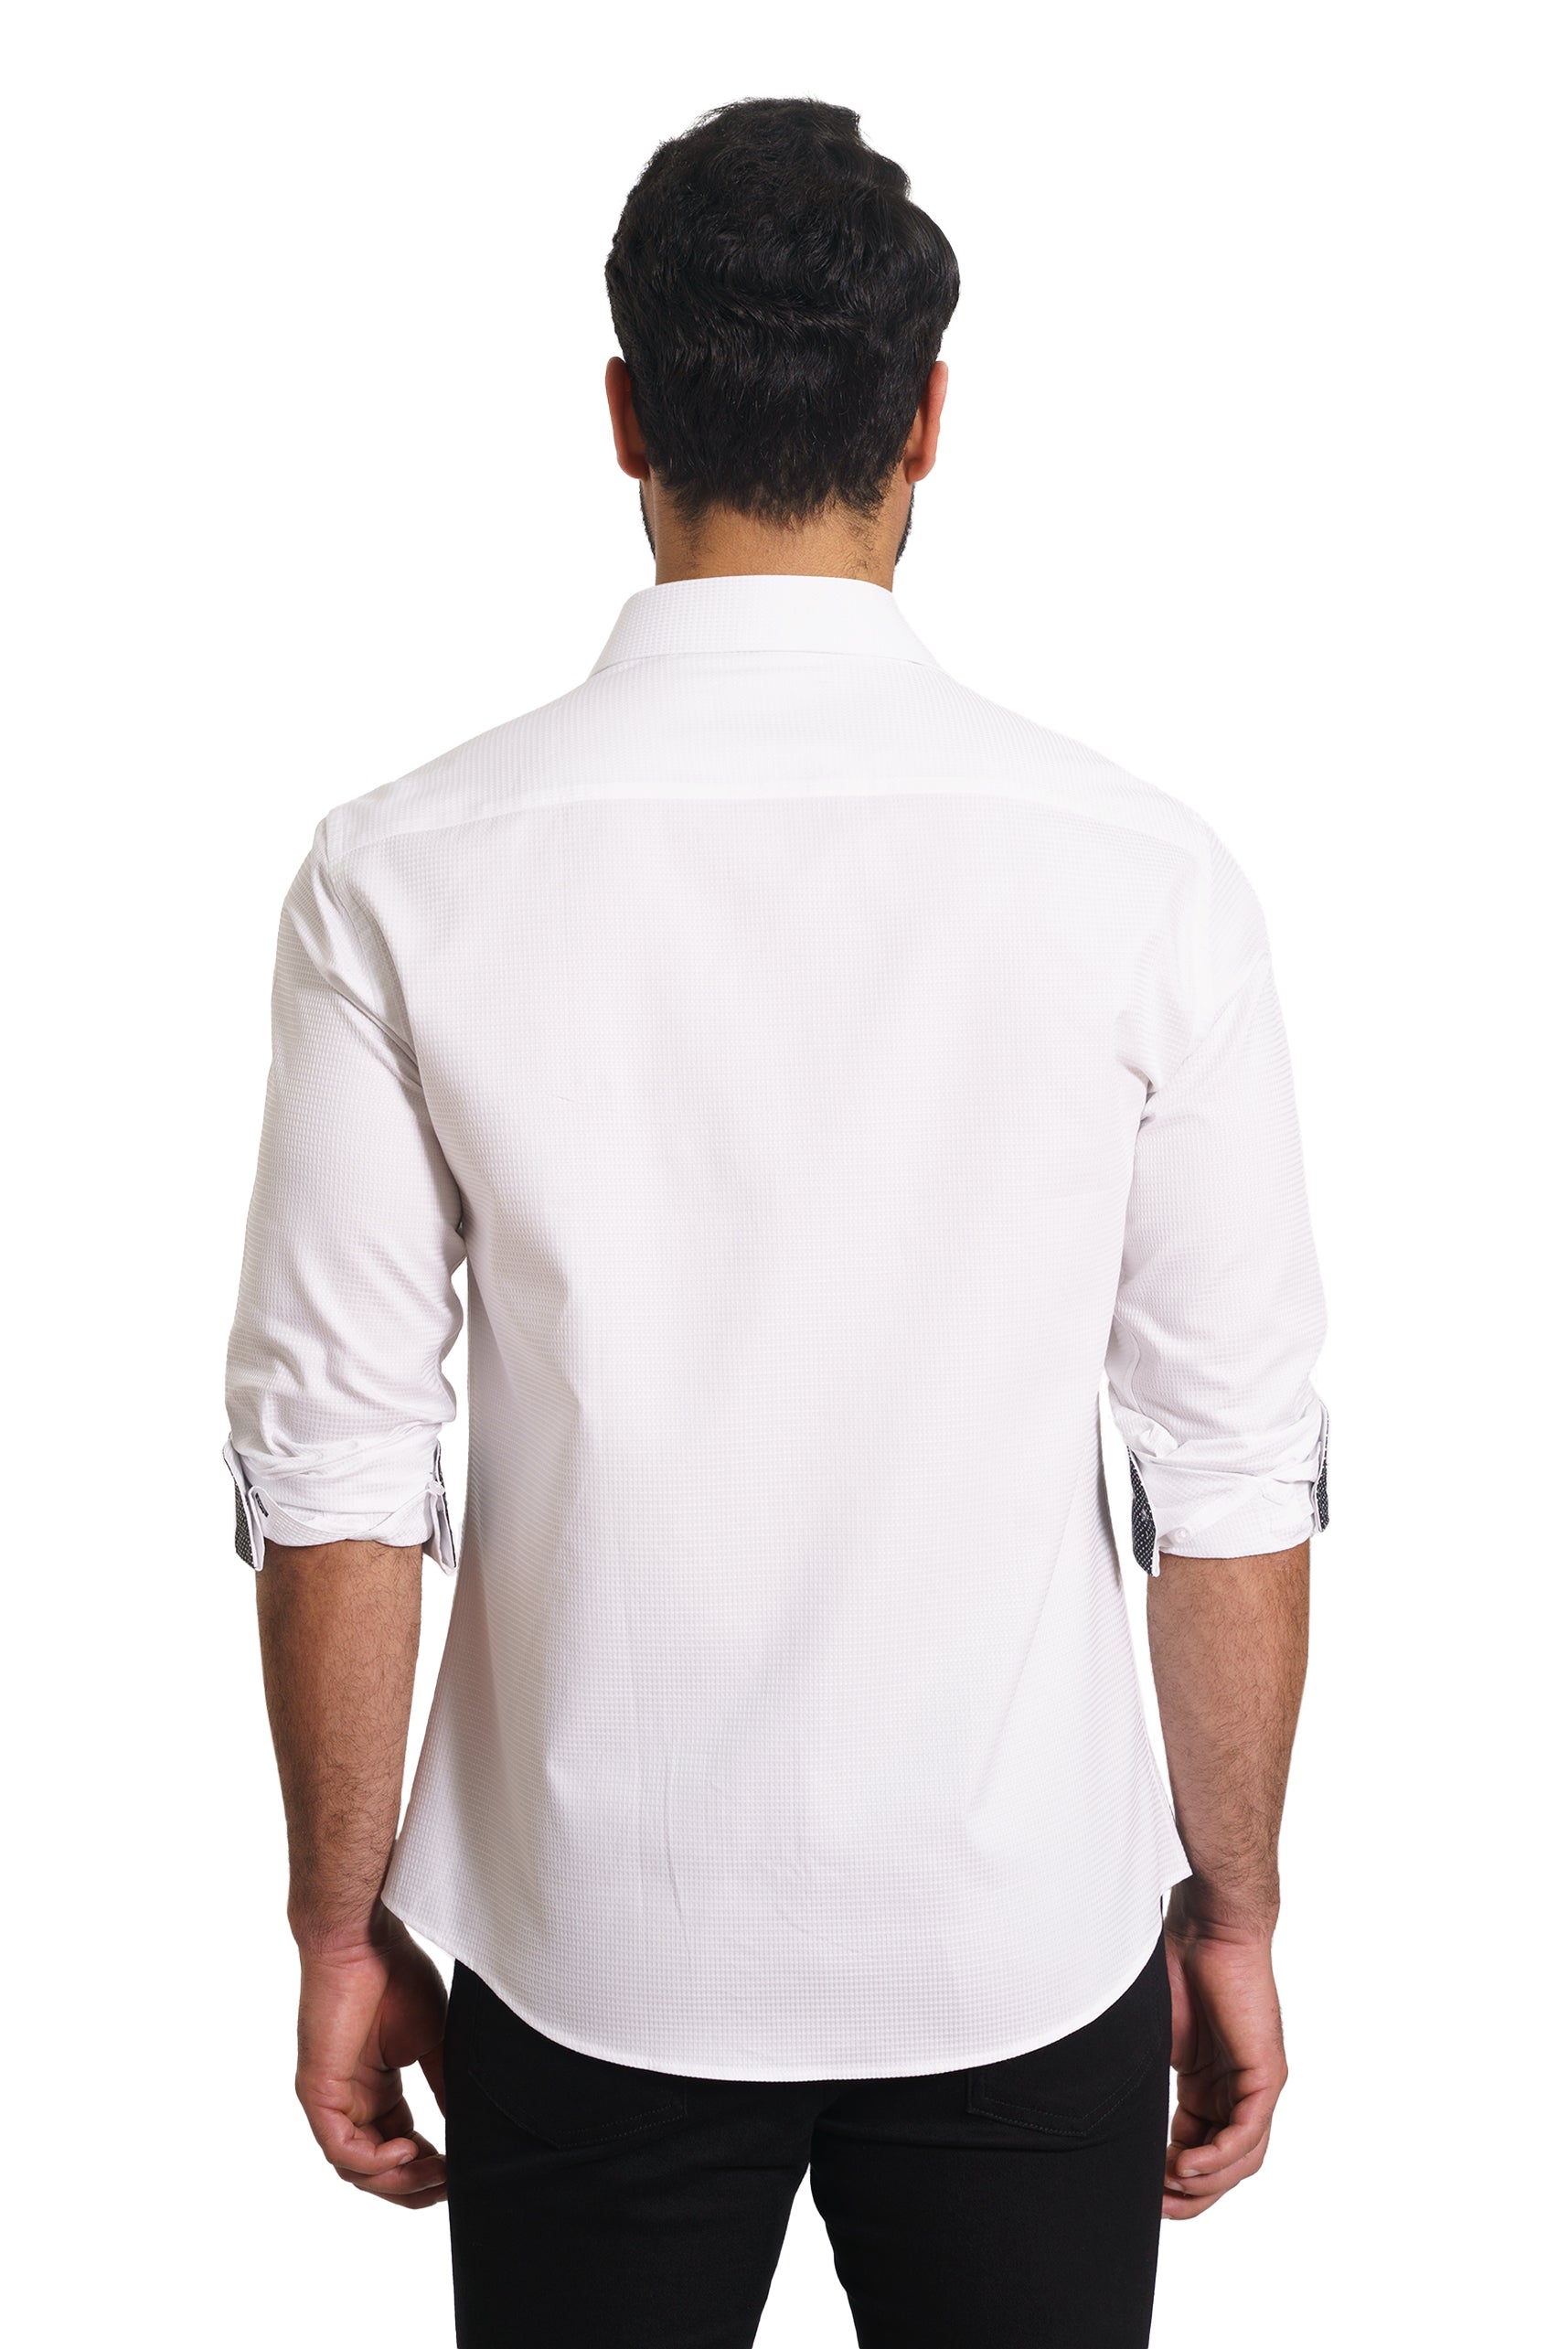 White Long Sleeve Shirt TH-2874 Back